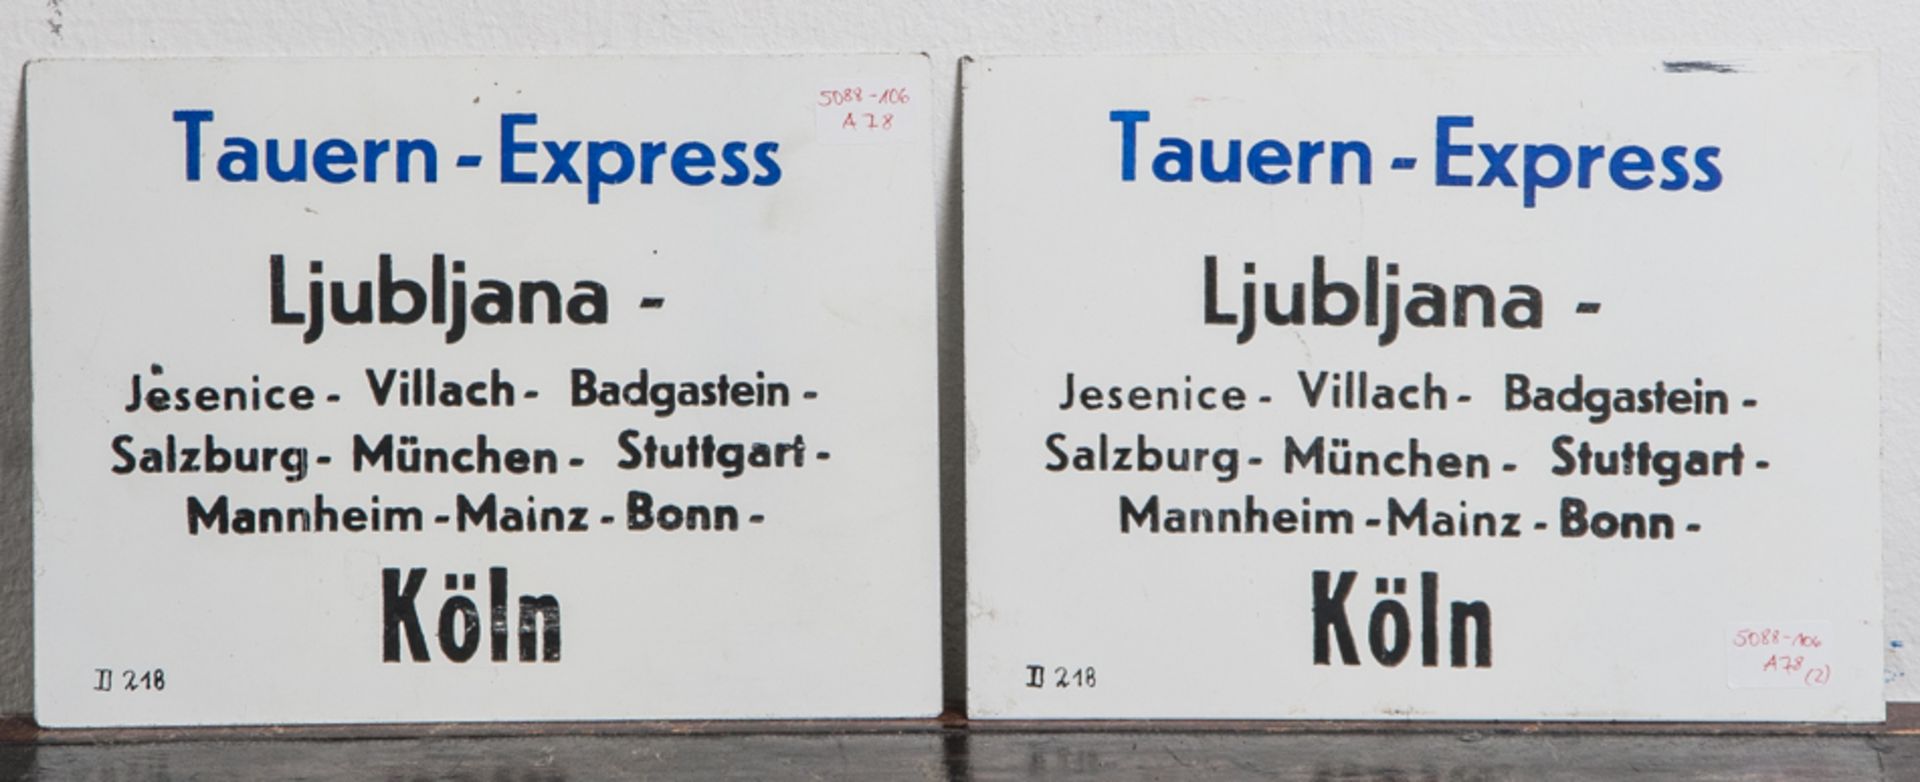 Zwei Zugschilder, Metall, beschriftet, 1. Seite "Tauern - Express - Stuttgart -Ljubljana", 2.